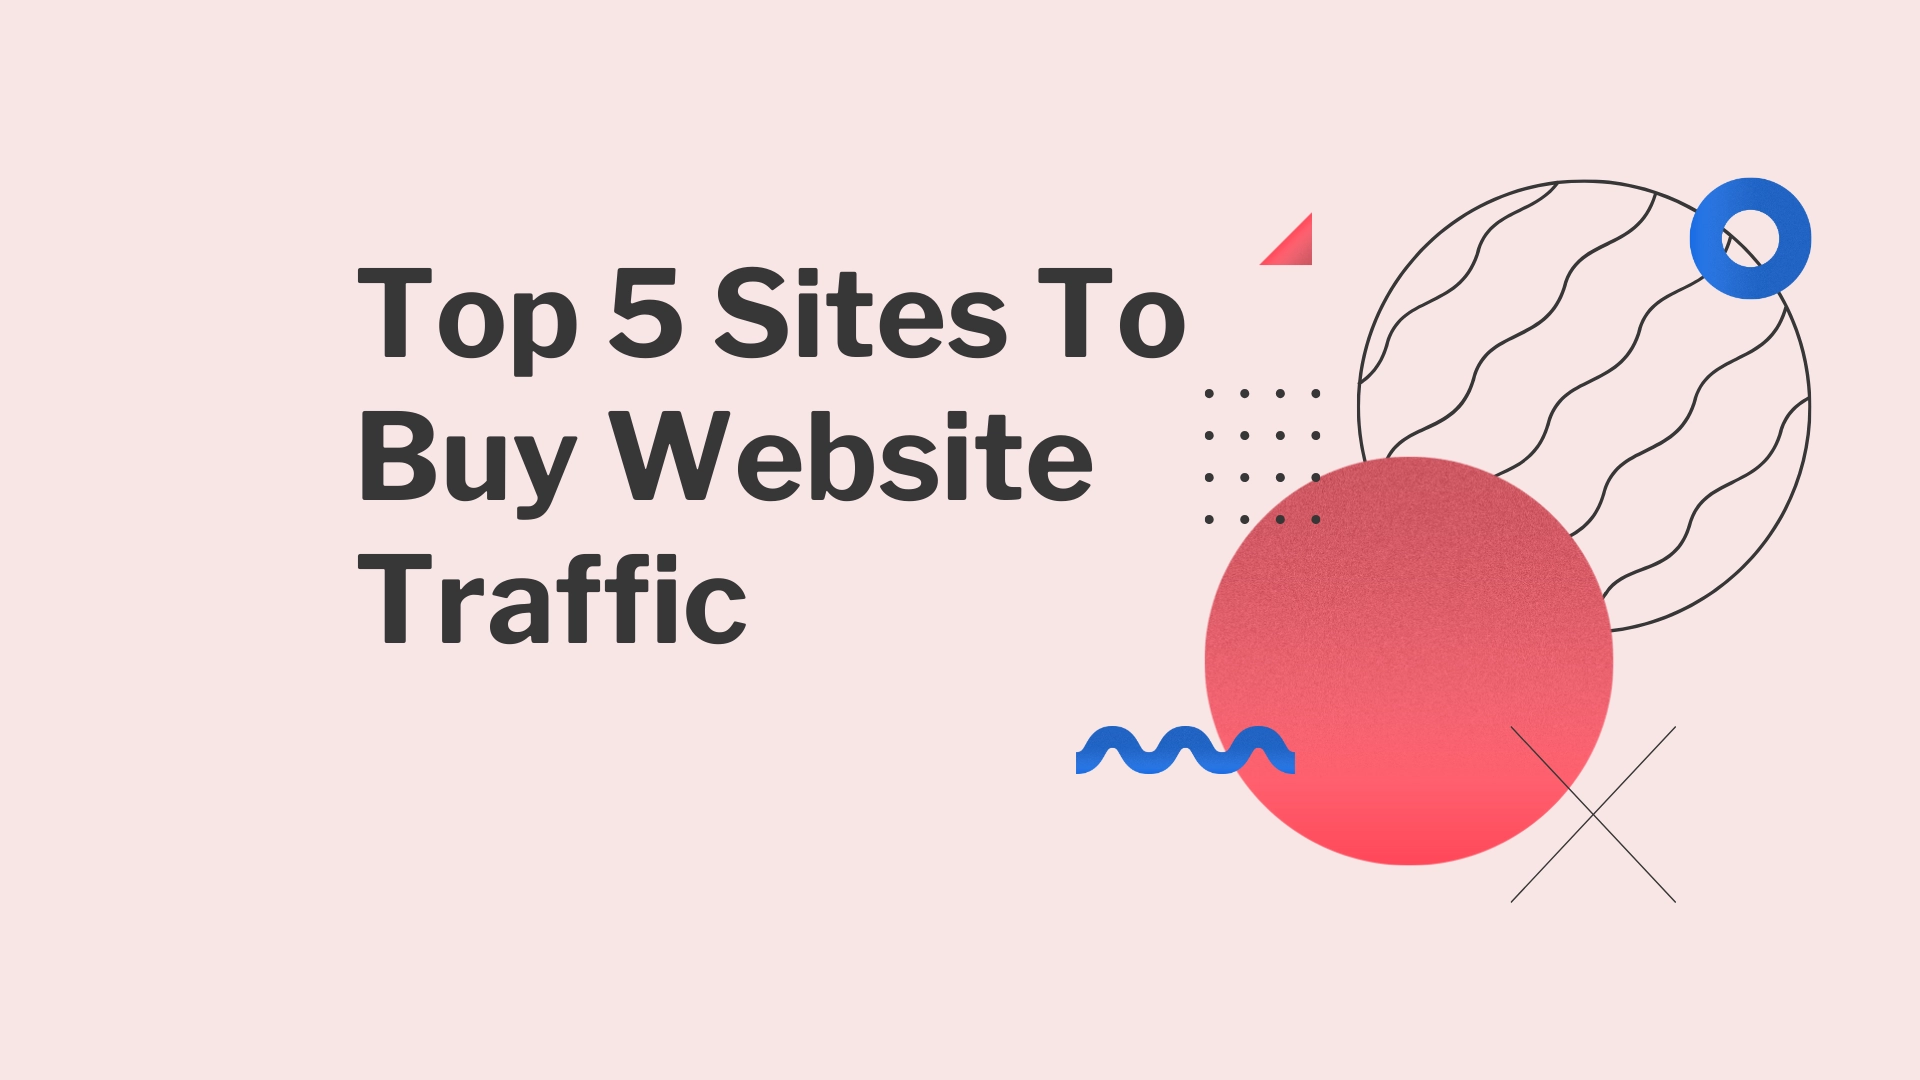 Top 5 Sites To Buy Website Traffic